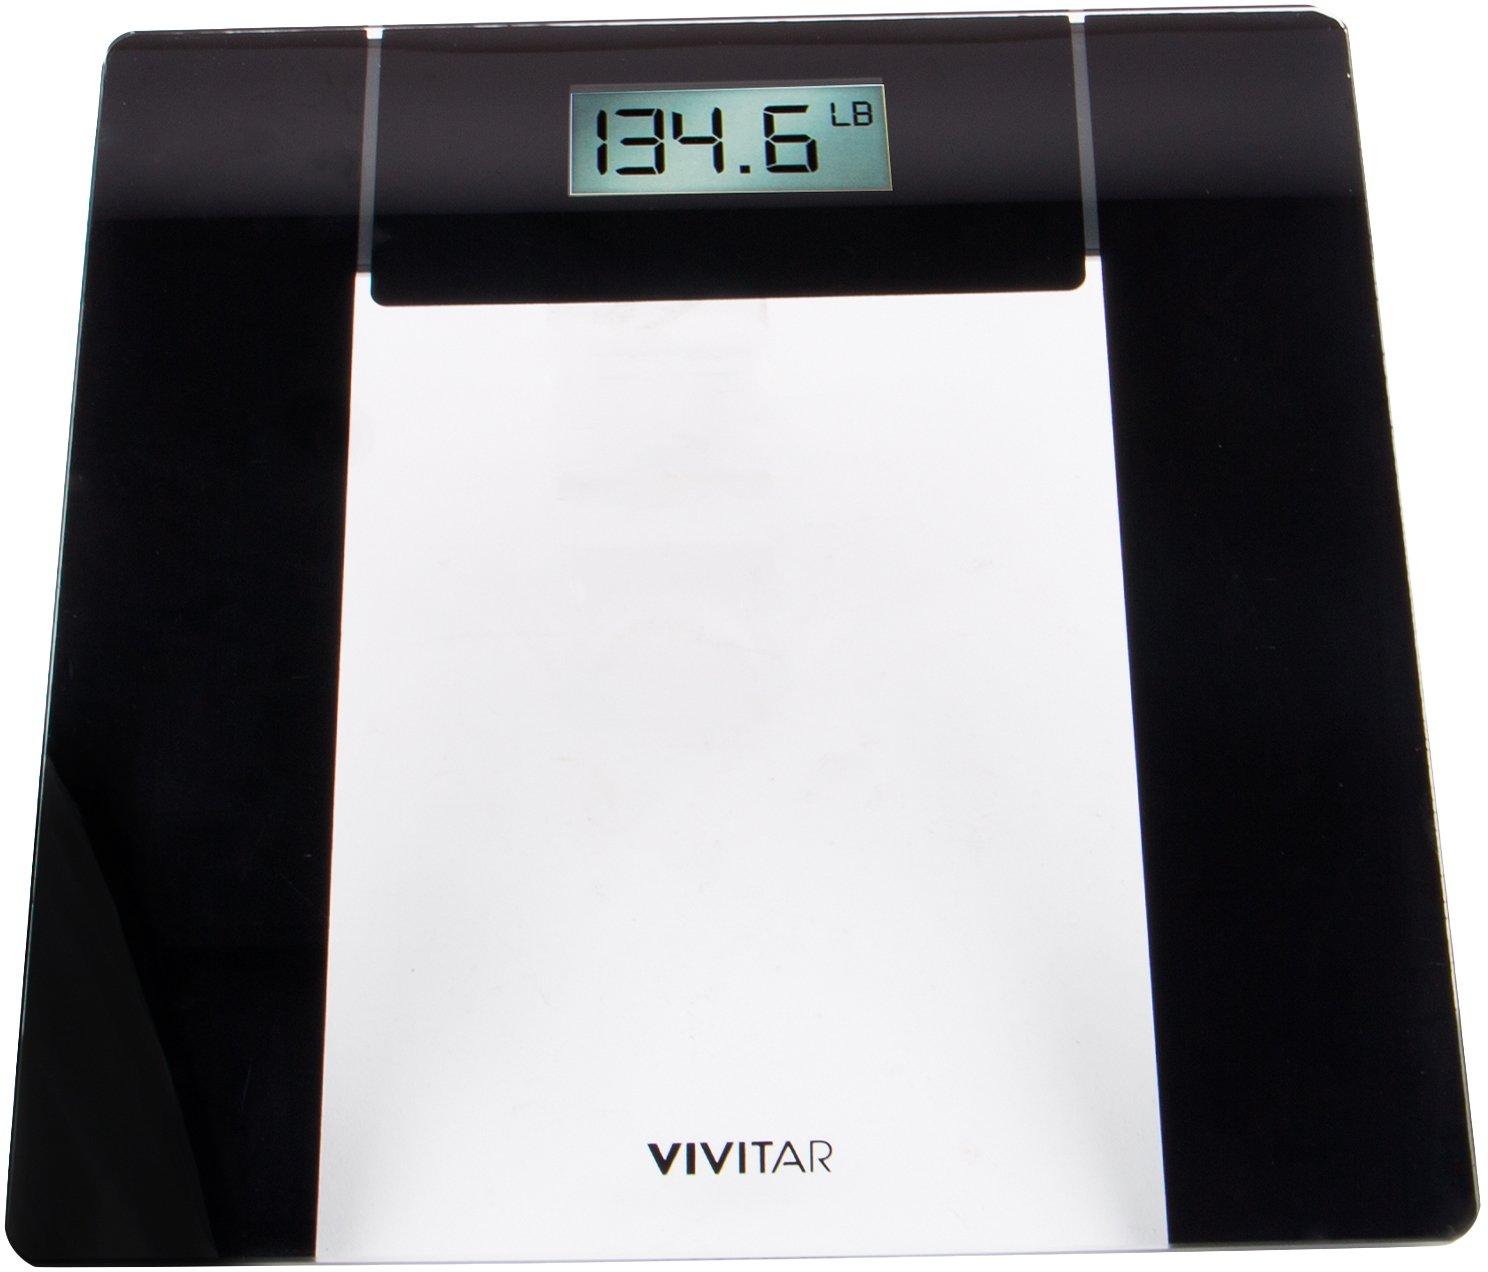 Vivitar Essentials Series Digital Bathroom Scale